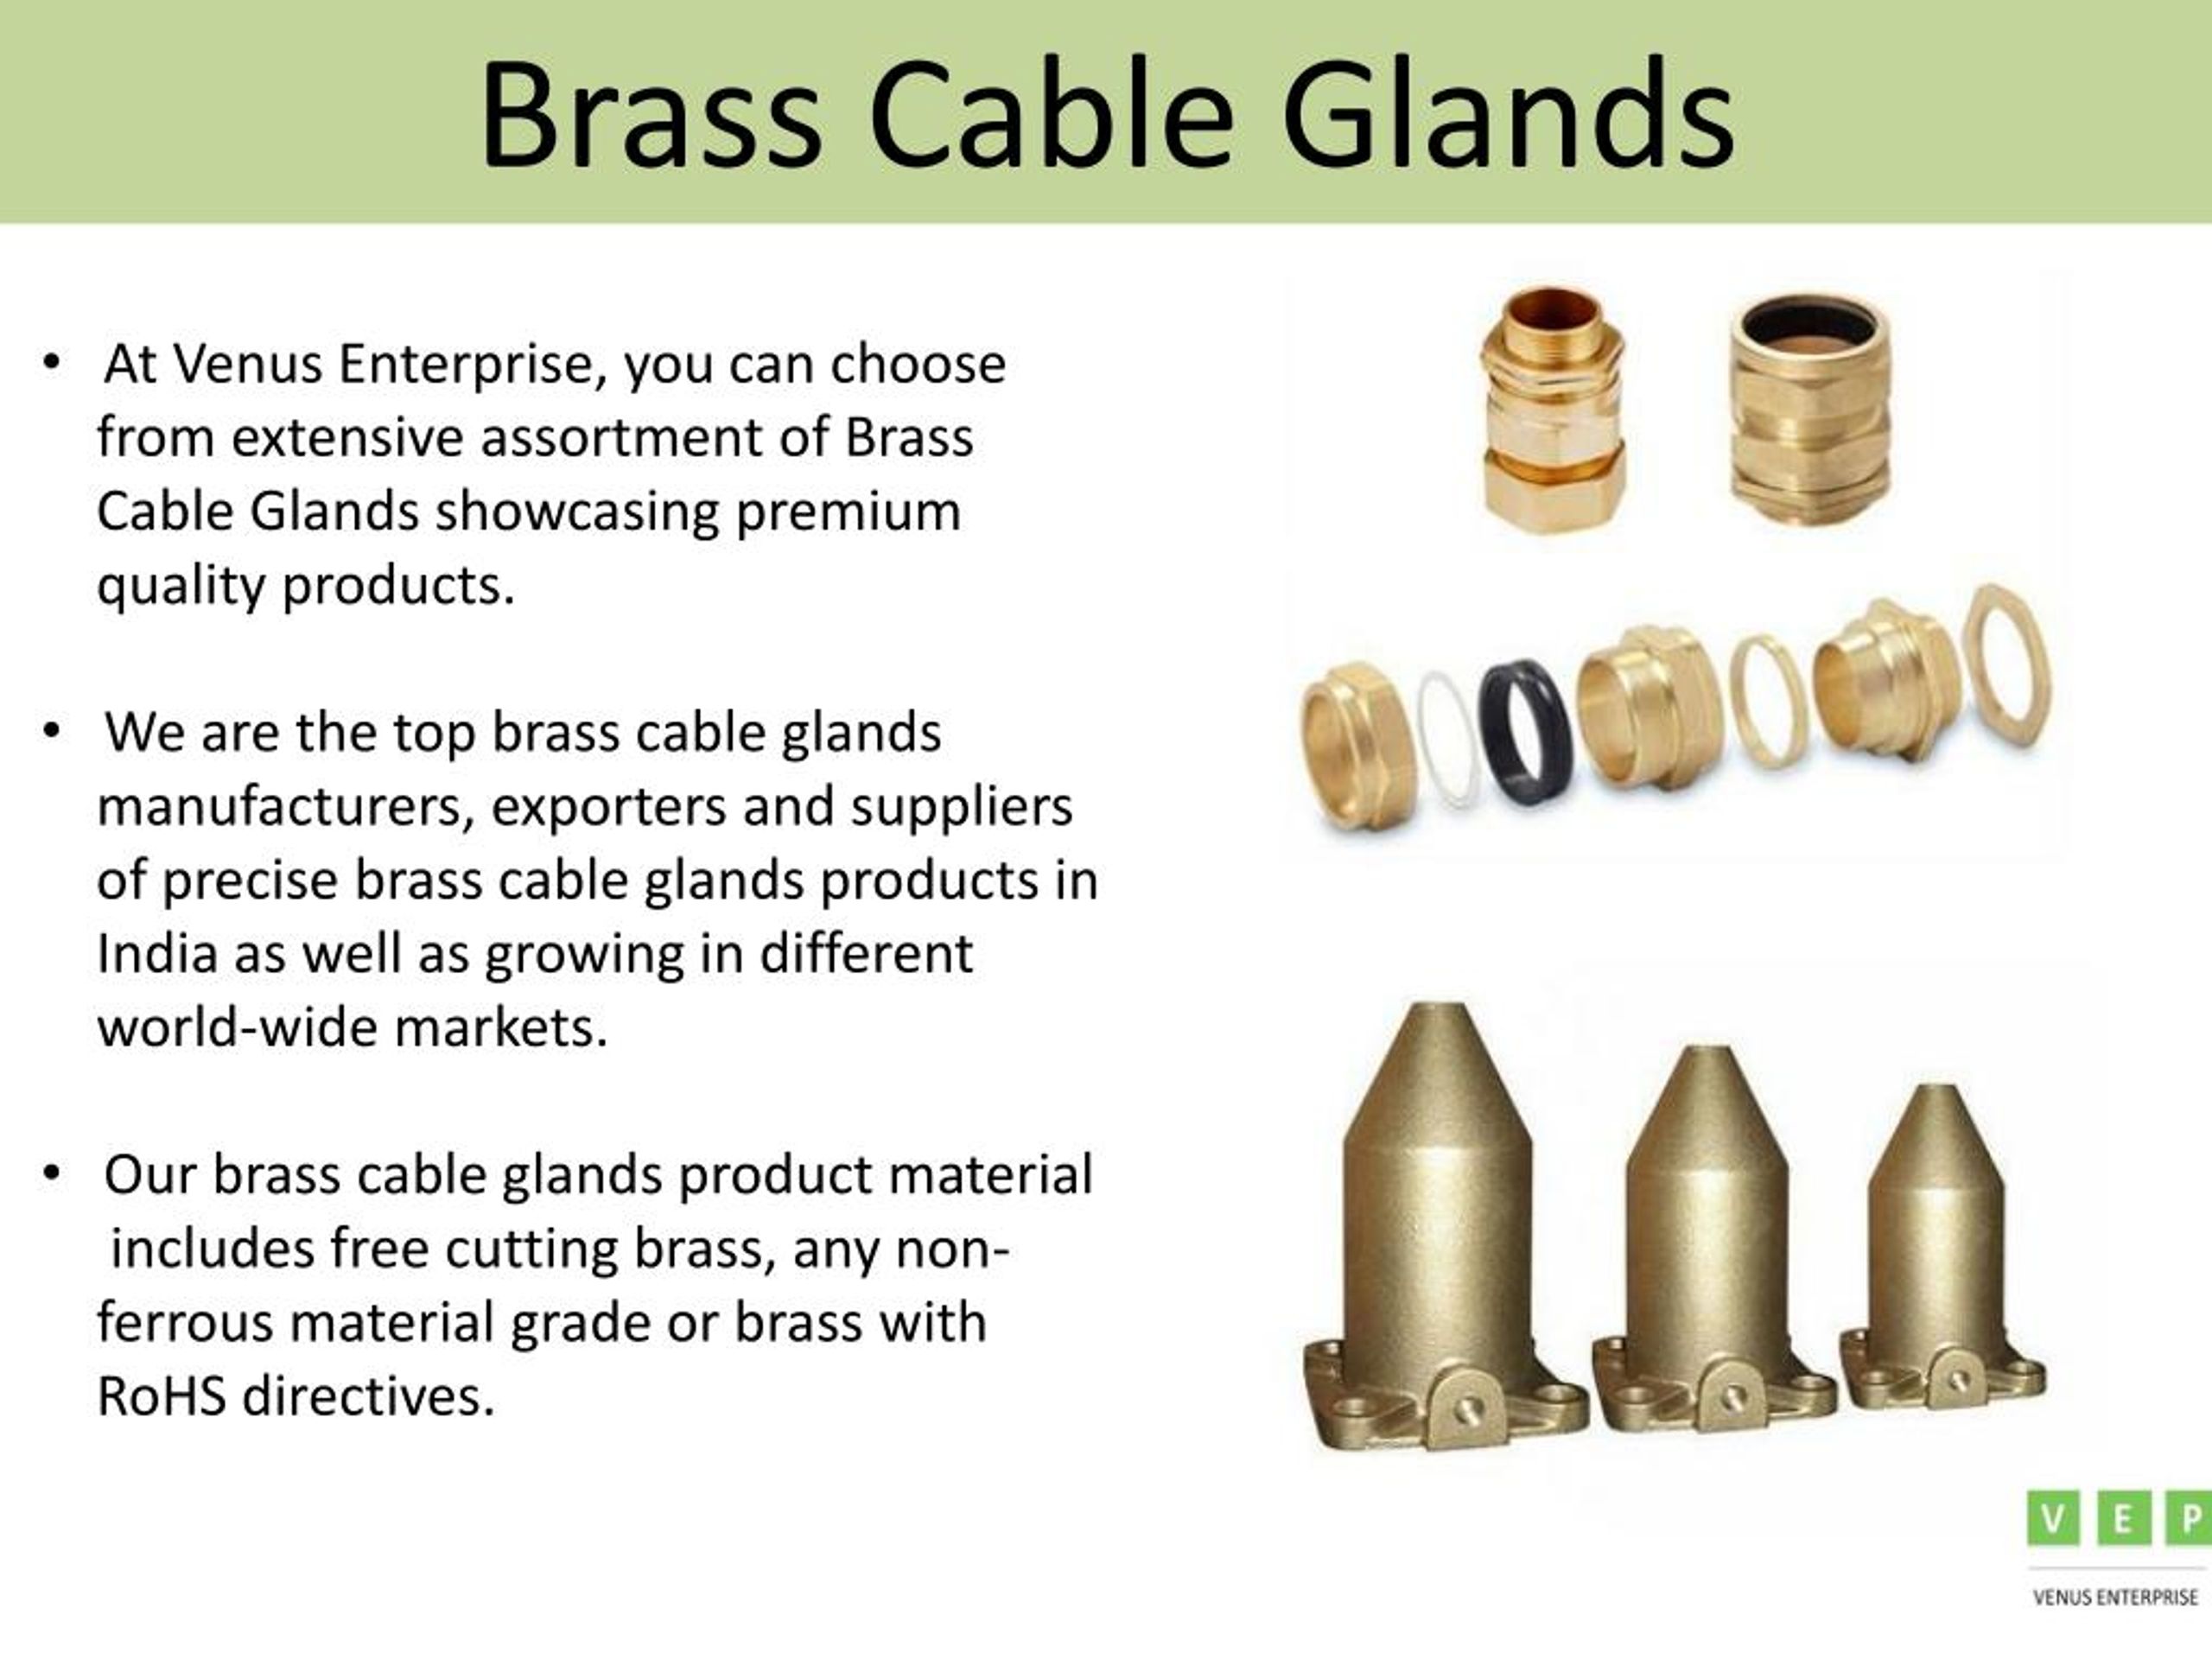 Brass Fittings & Inserts Manufacturer, Exporter in India - Venus Enterprise